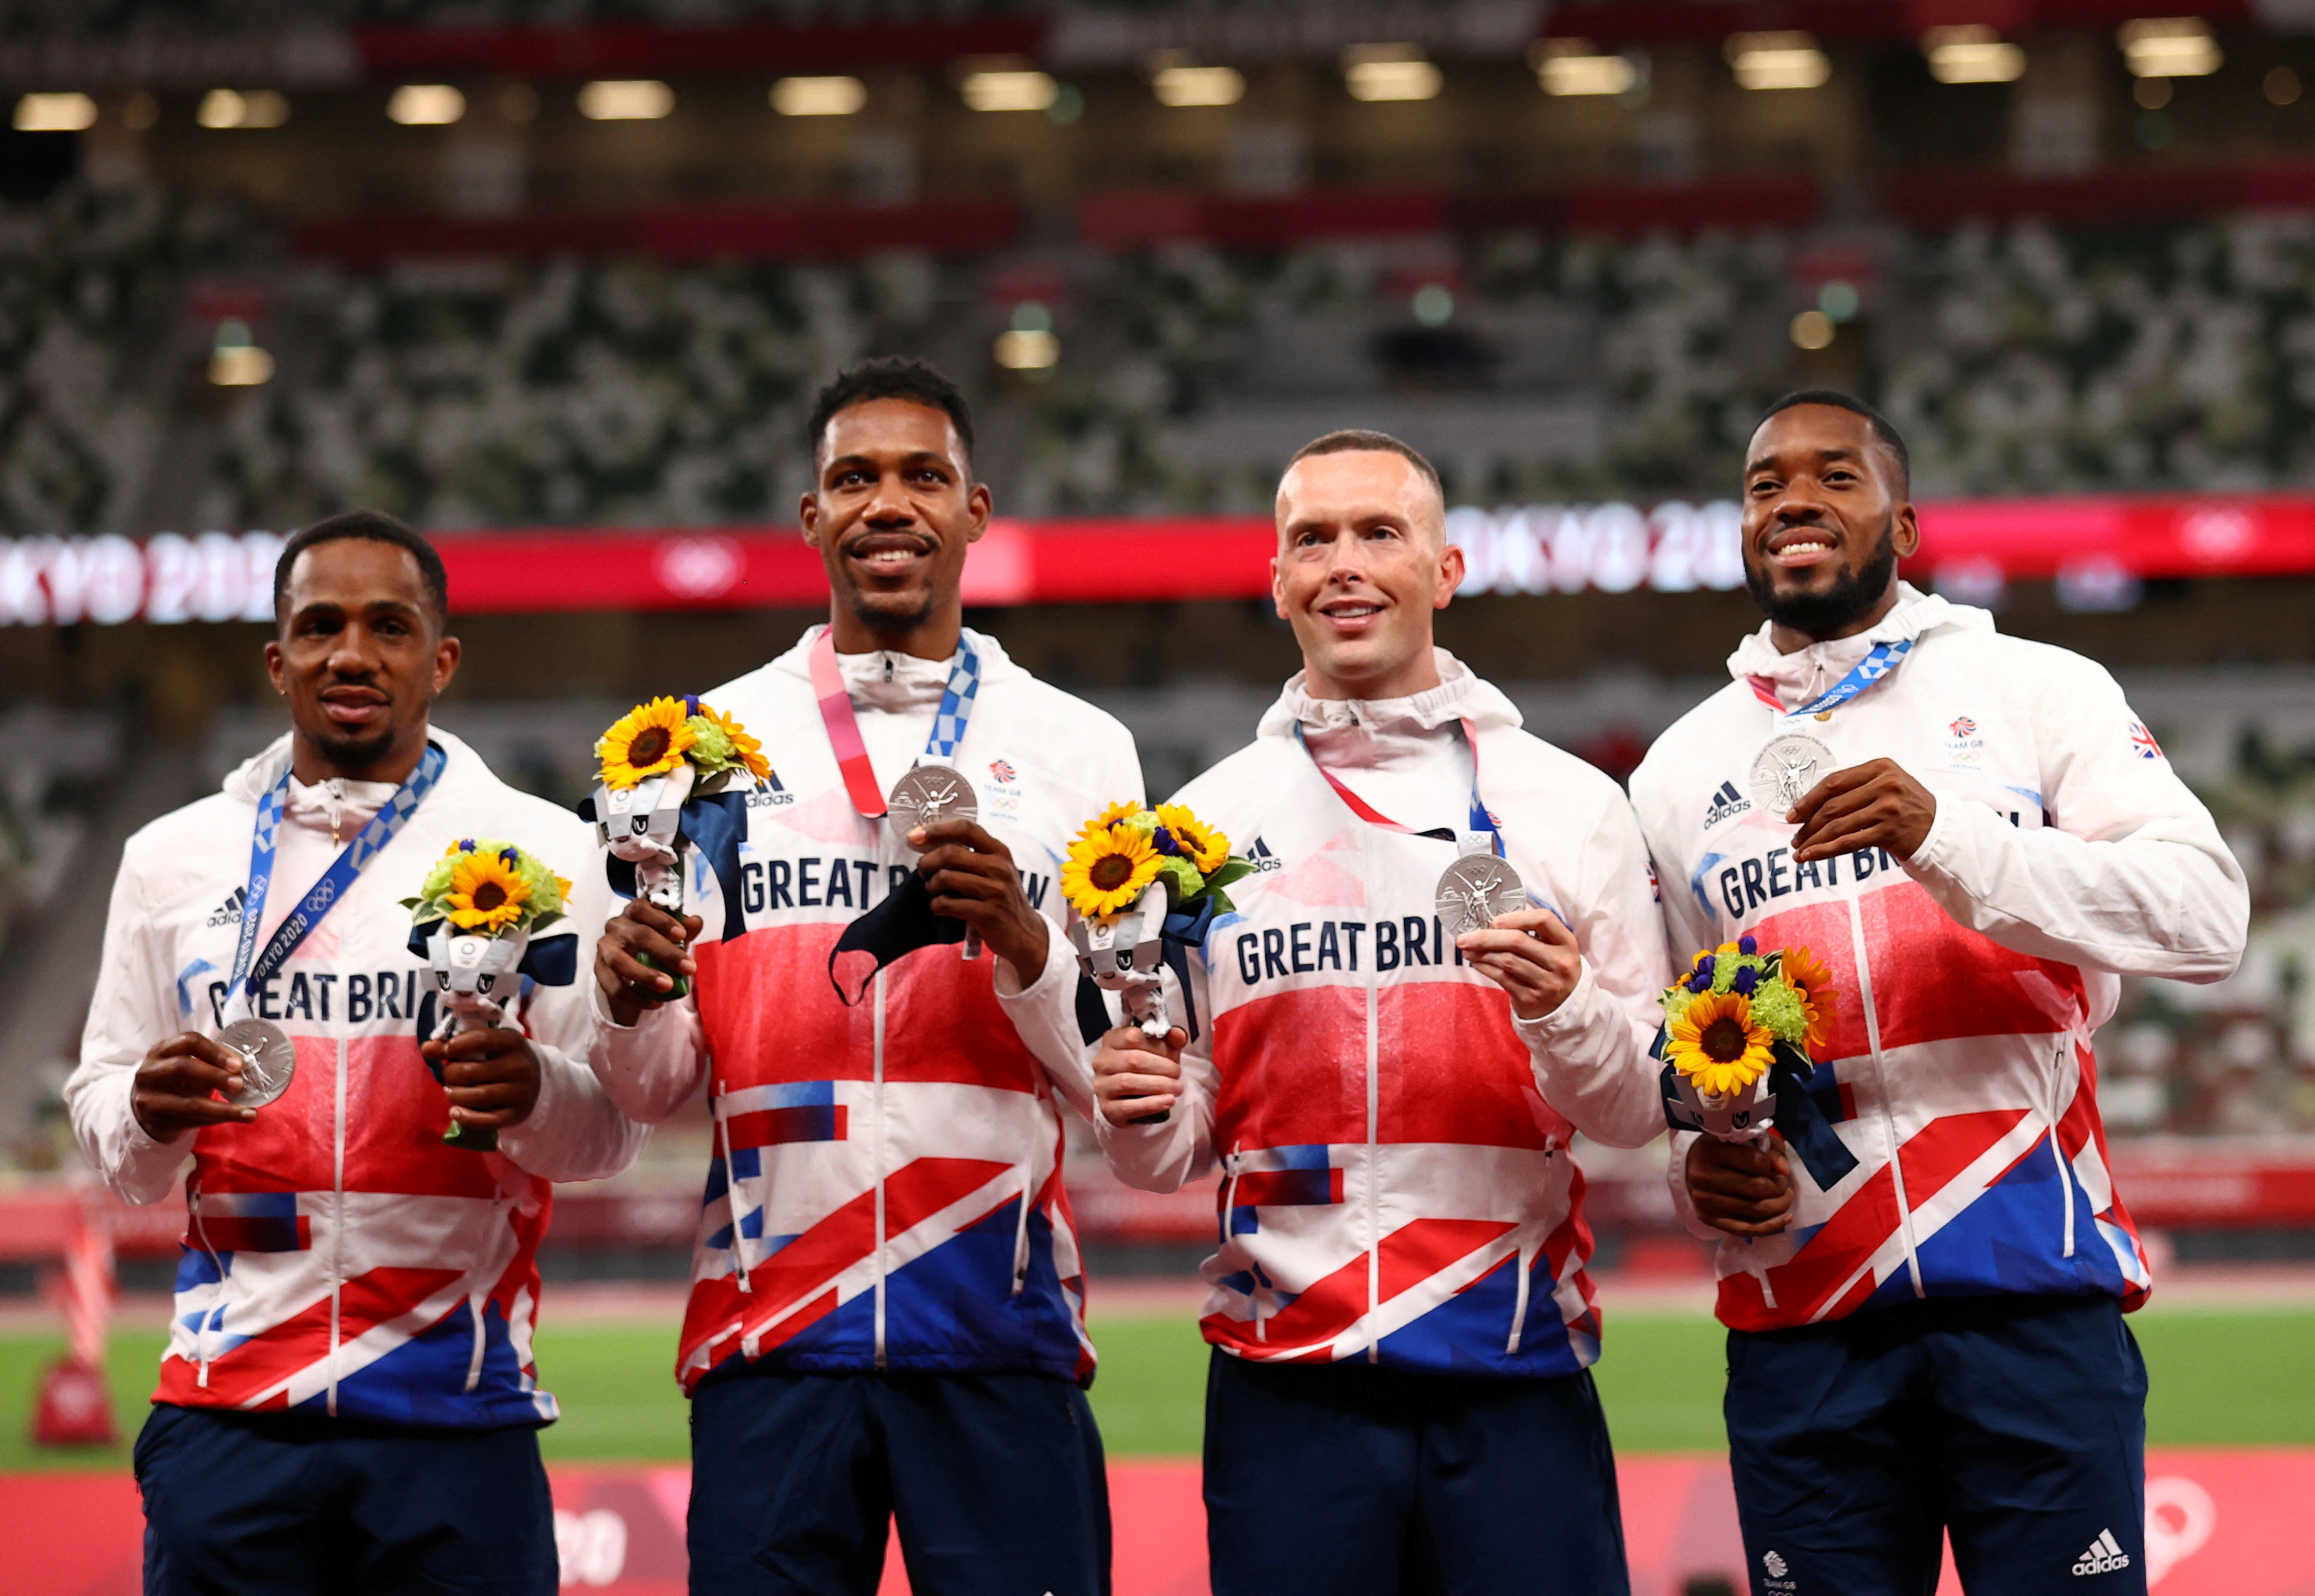 Athletics - Men's 4 x 100m Relay - Medal Ceremony